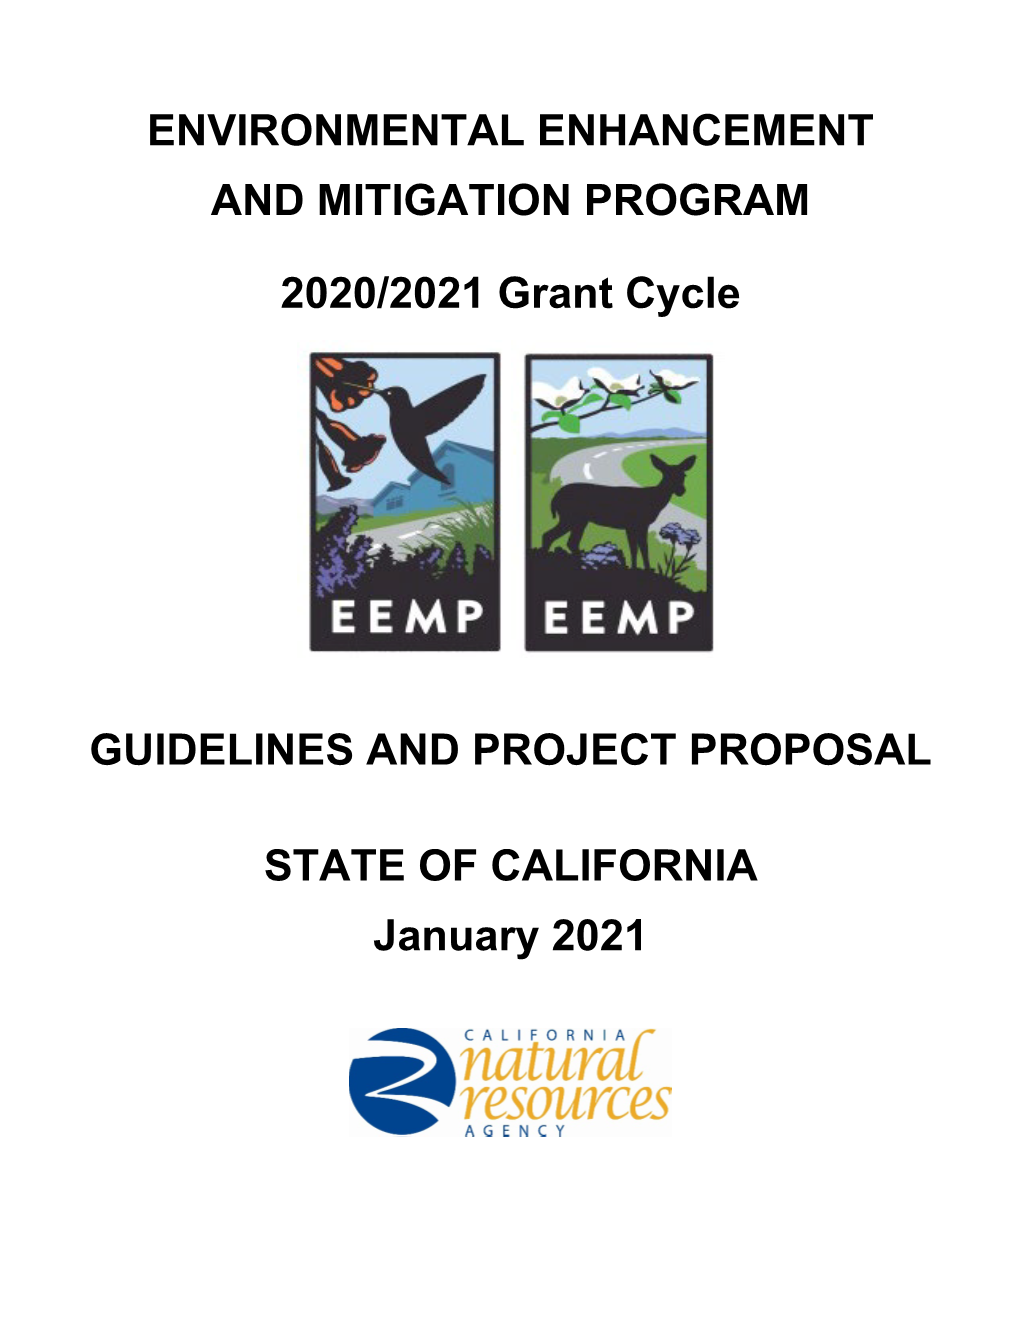 Environmental Enhancement and Mitigation Program 2020